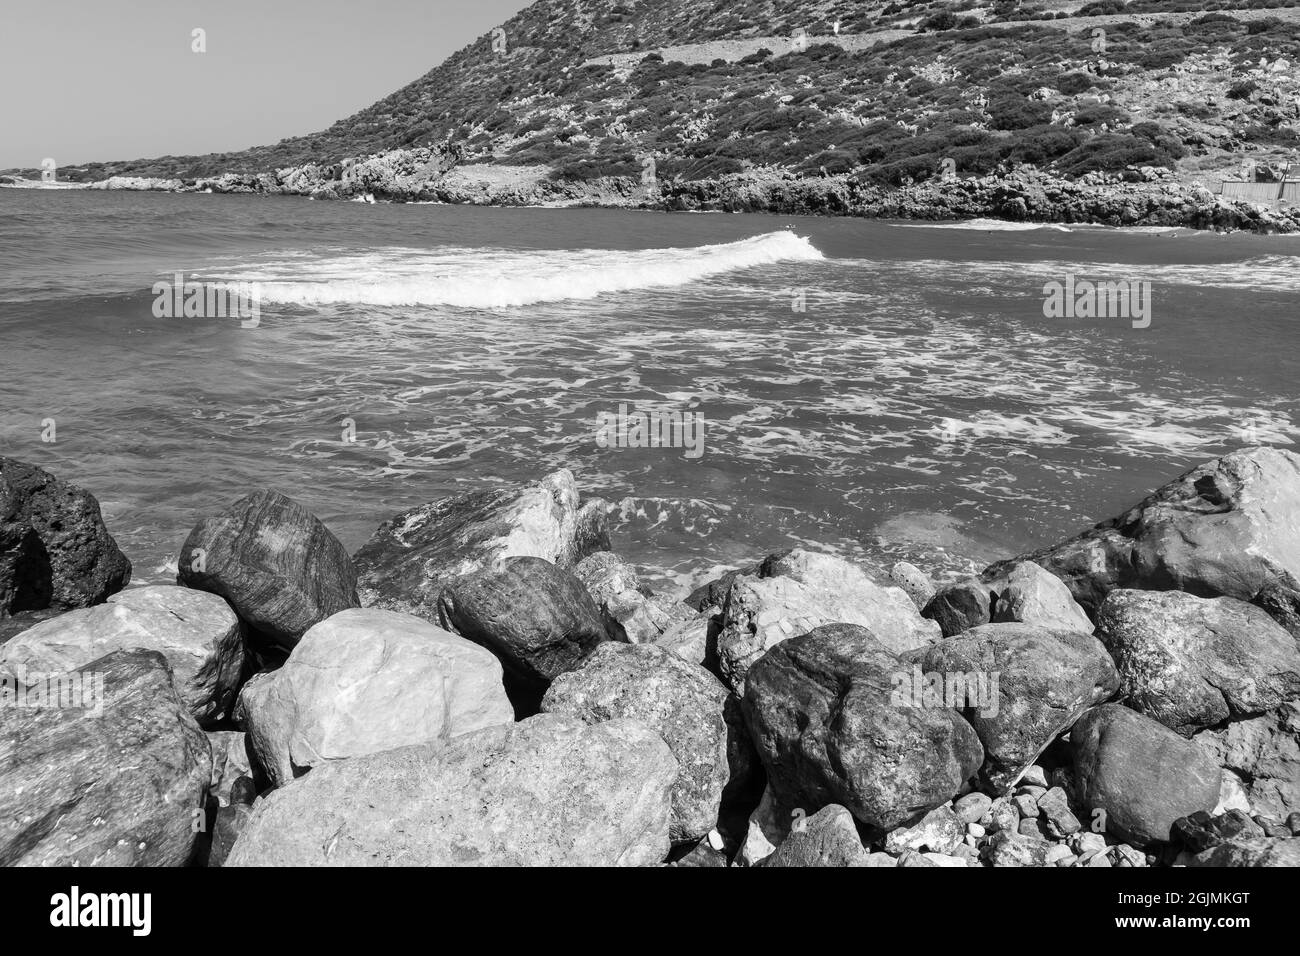 Rocks at a seashore on a hot summer day Stock Photo